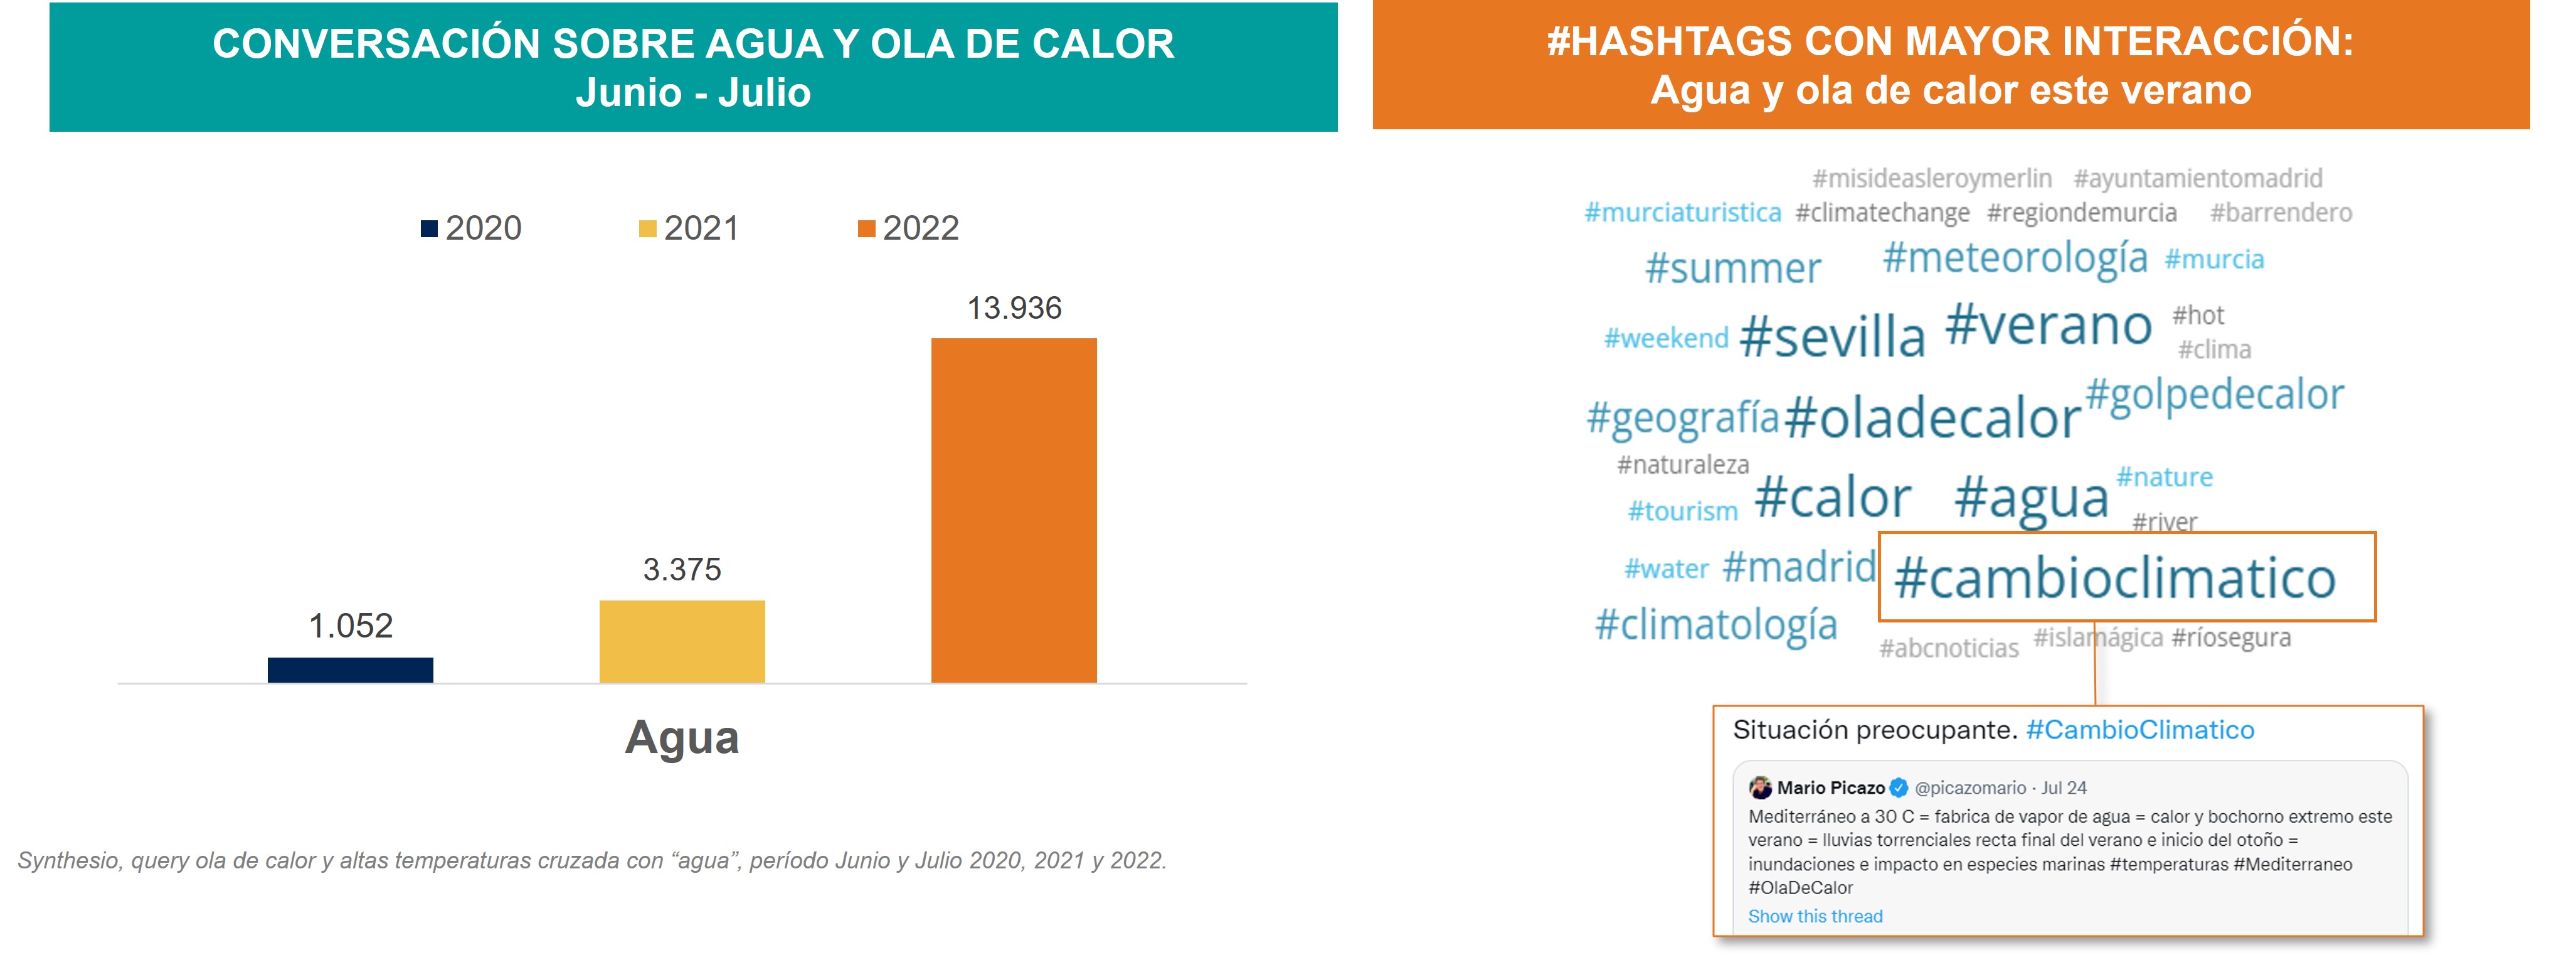 Conversacion_Agua_OladeCalor_CambioClimatico_ipsos_2022